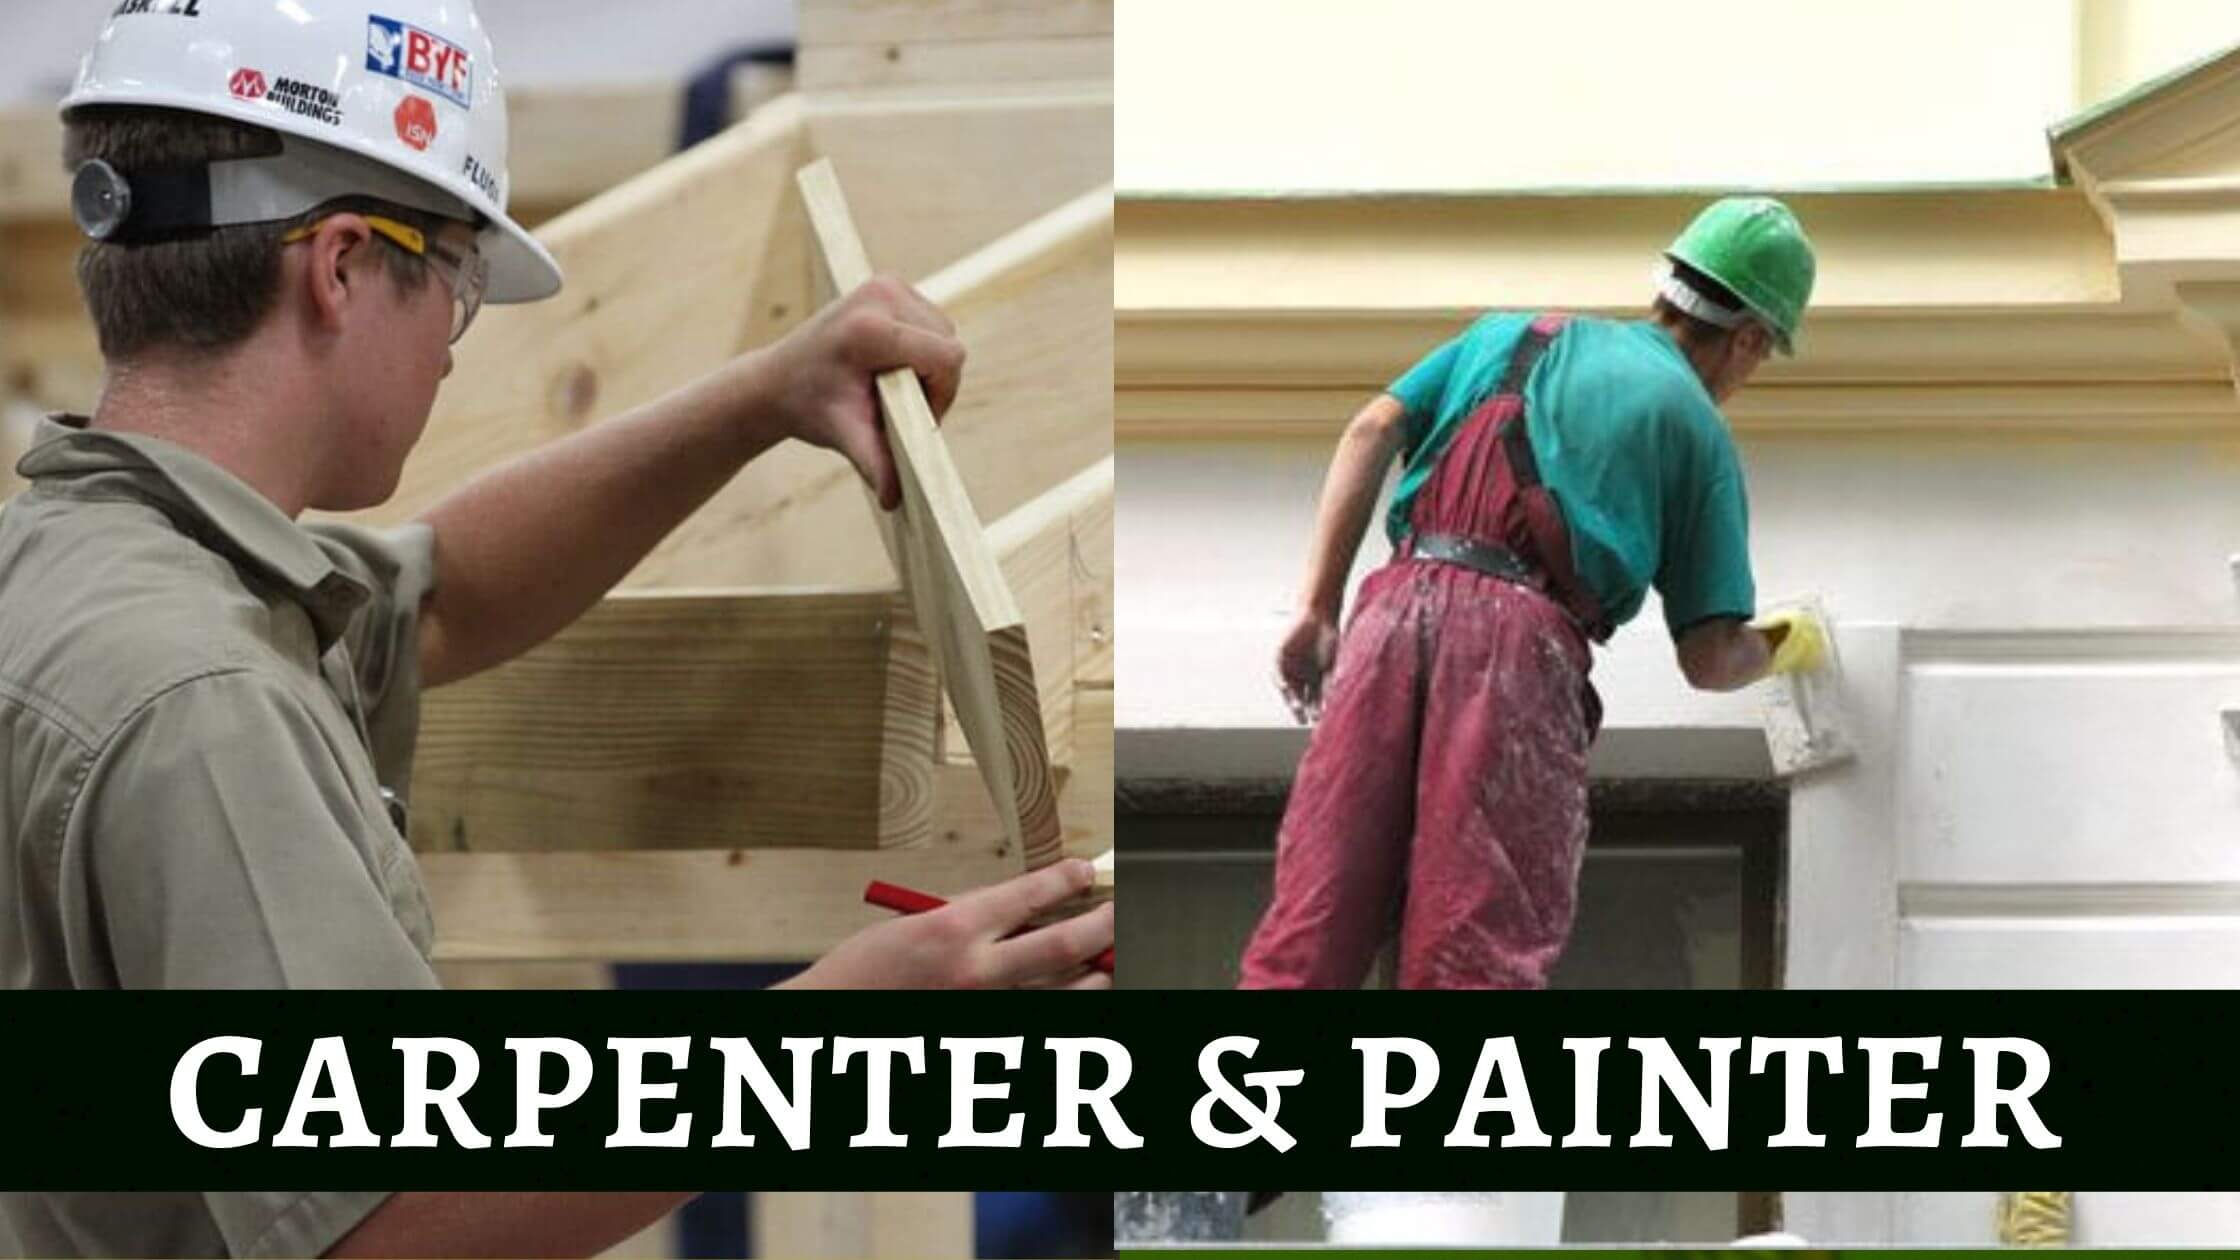 Carpenter and painter jobs